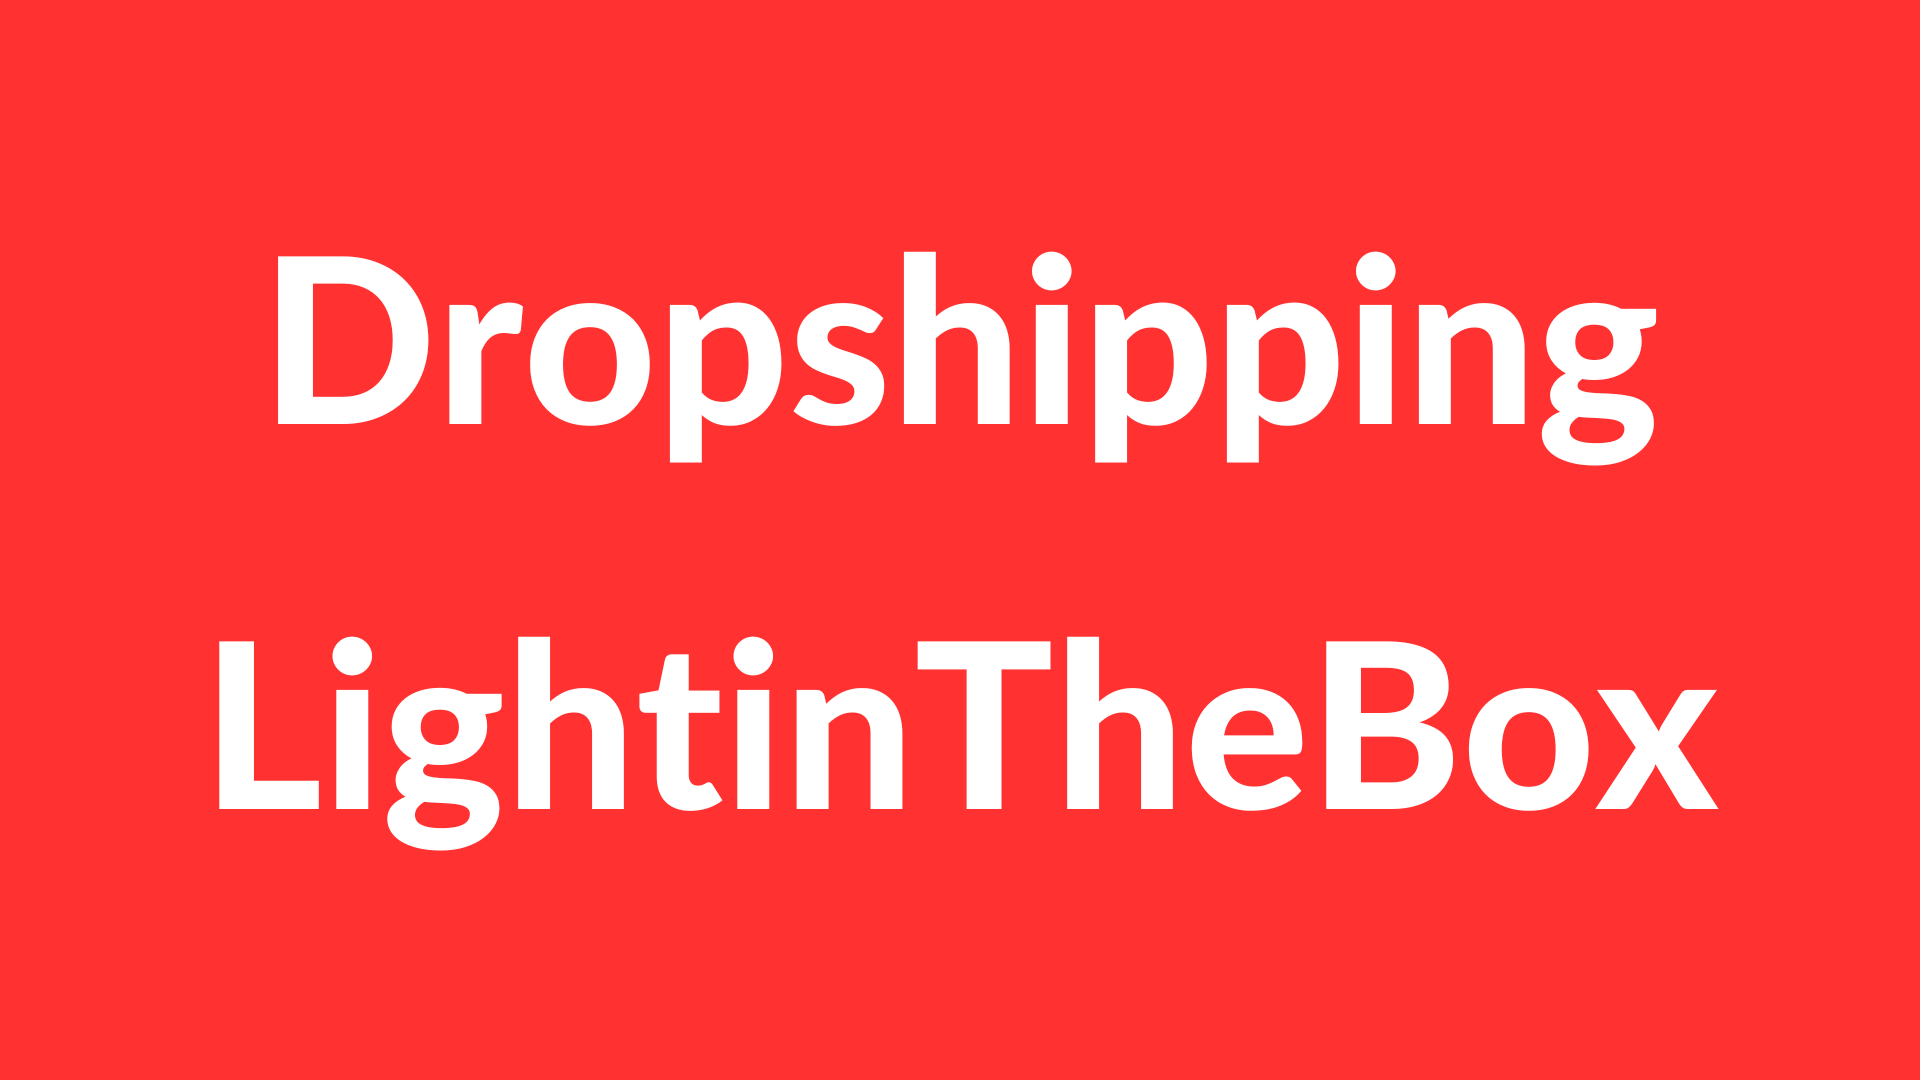 Dropshipping avec LightintheBox : Le Guide